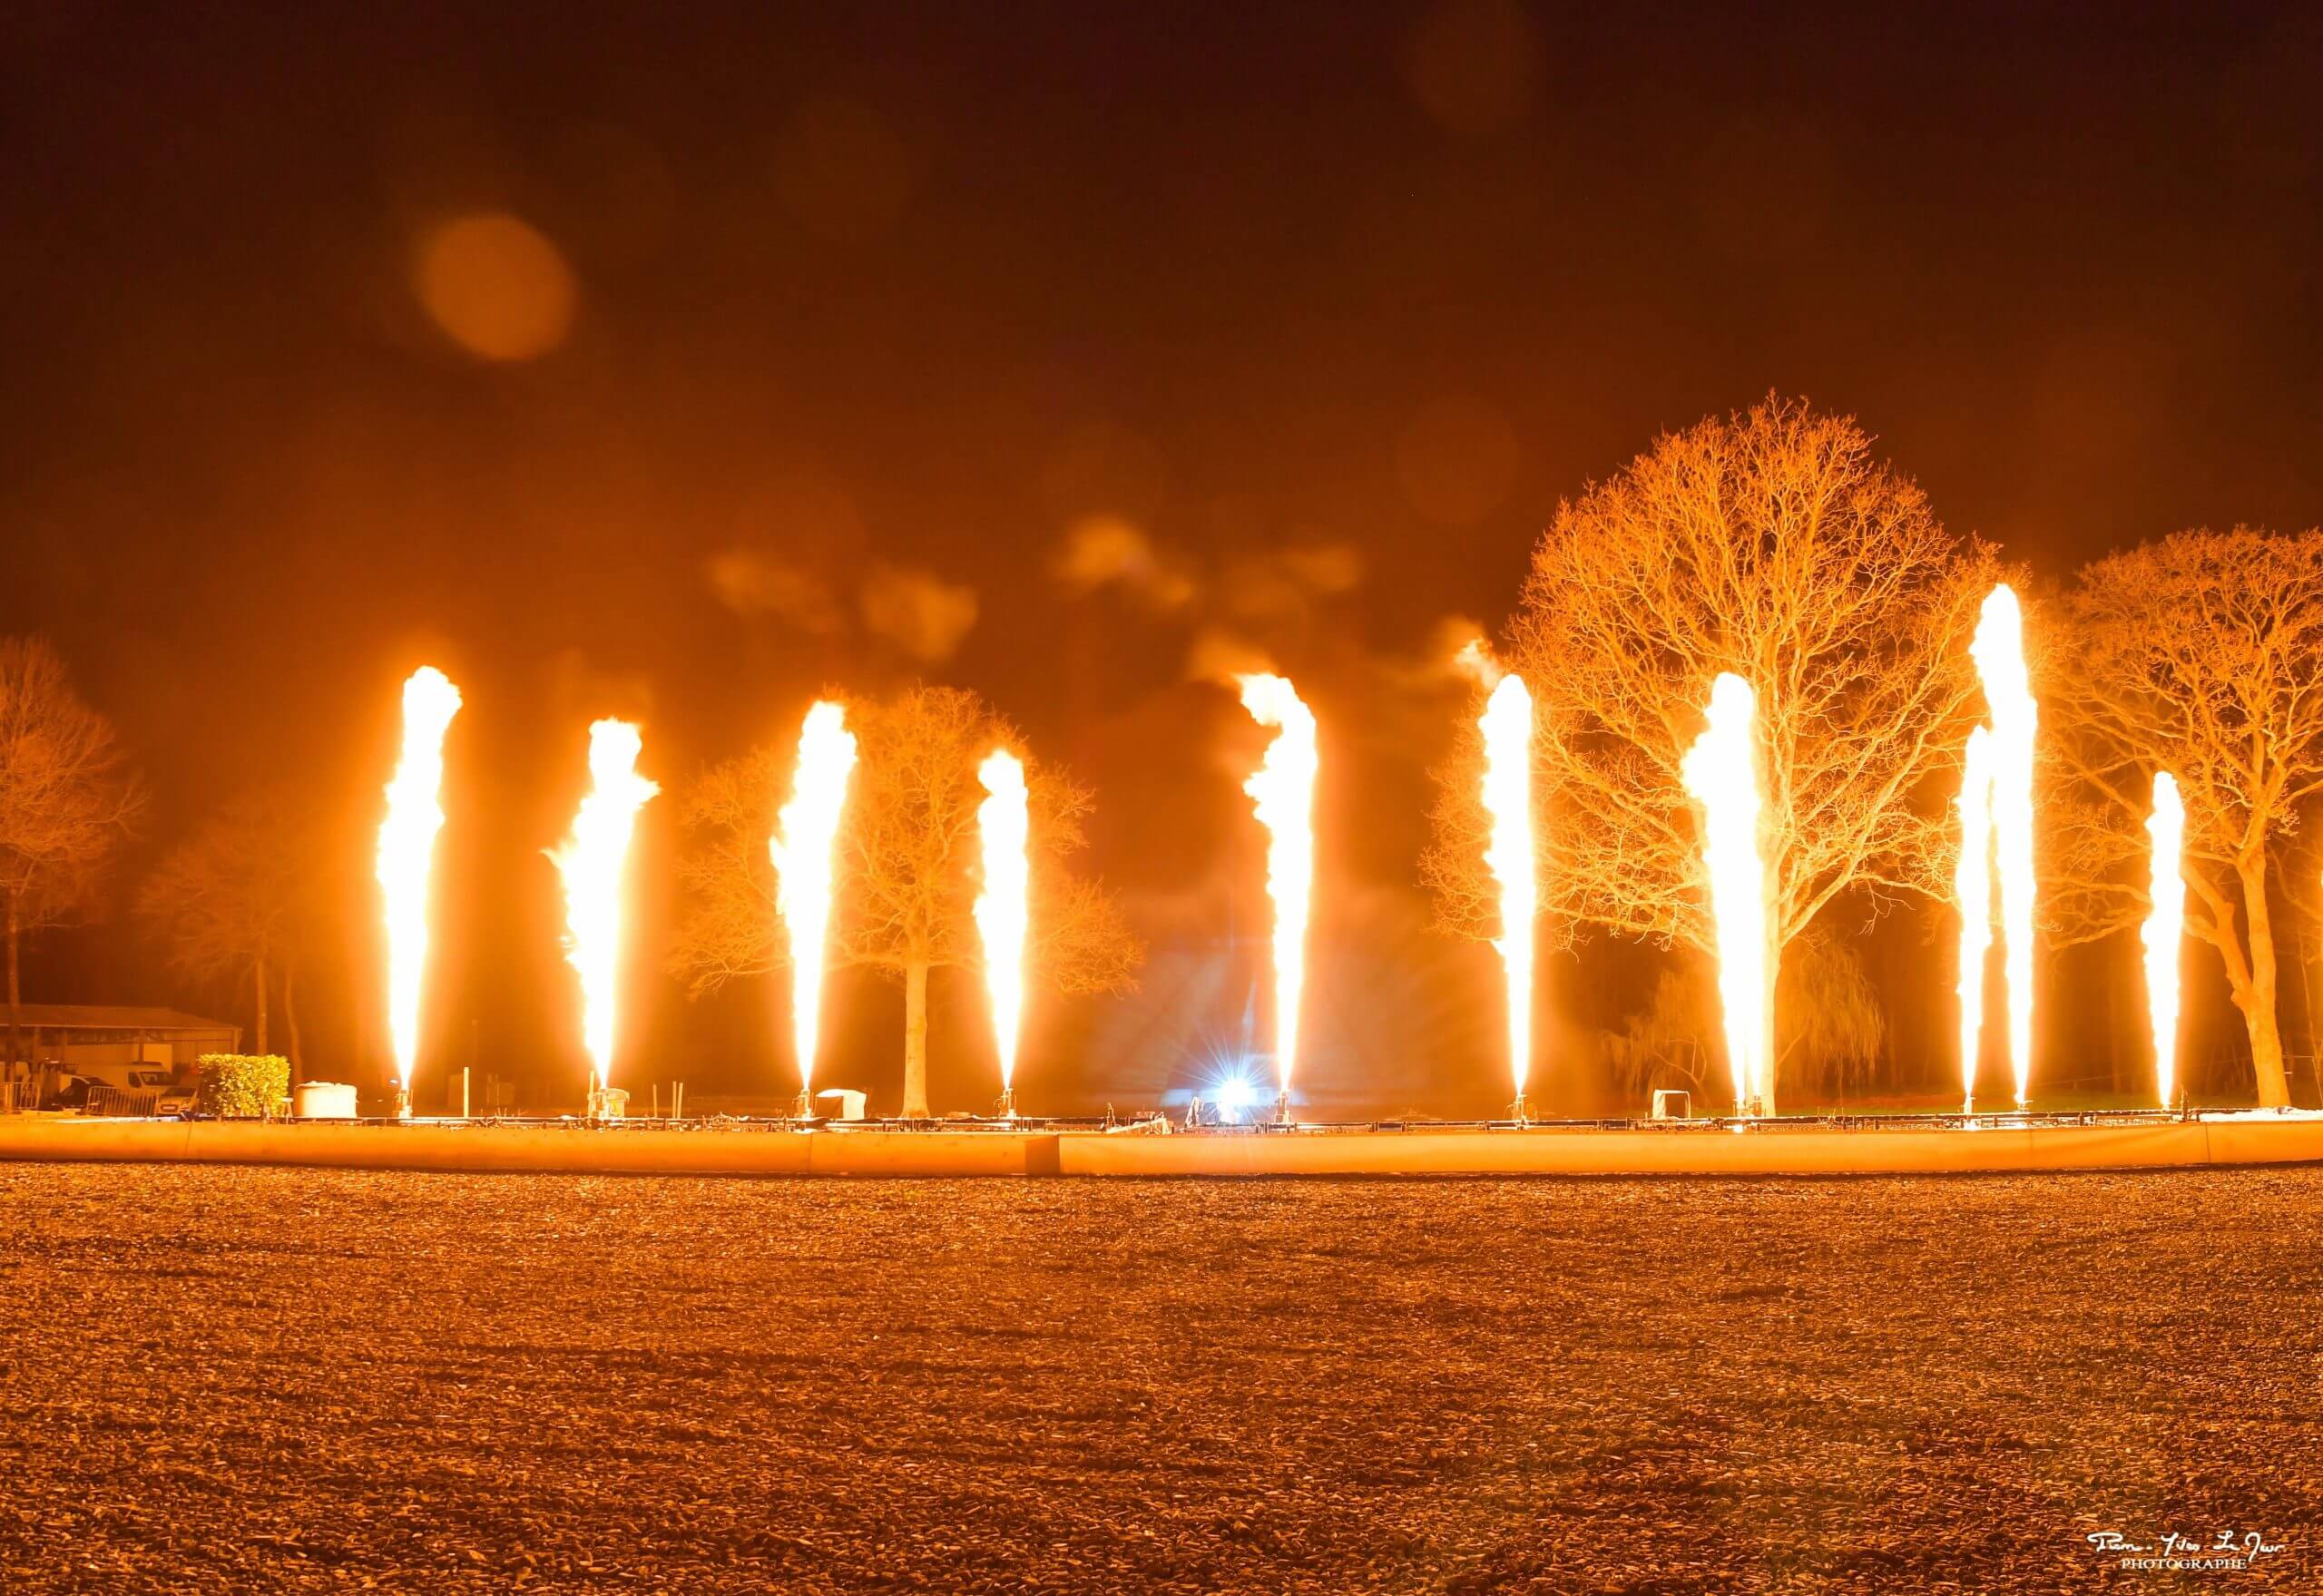 Atlantid - Foto de llamas al aire libre